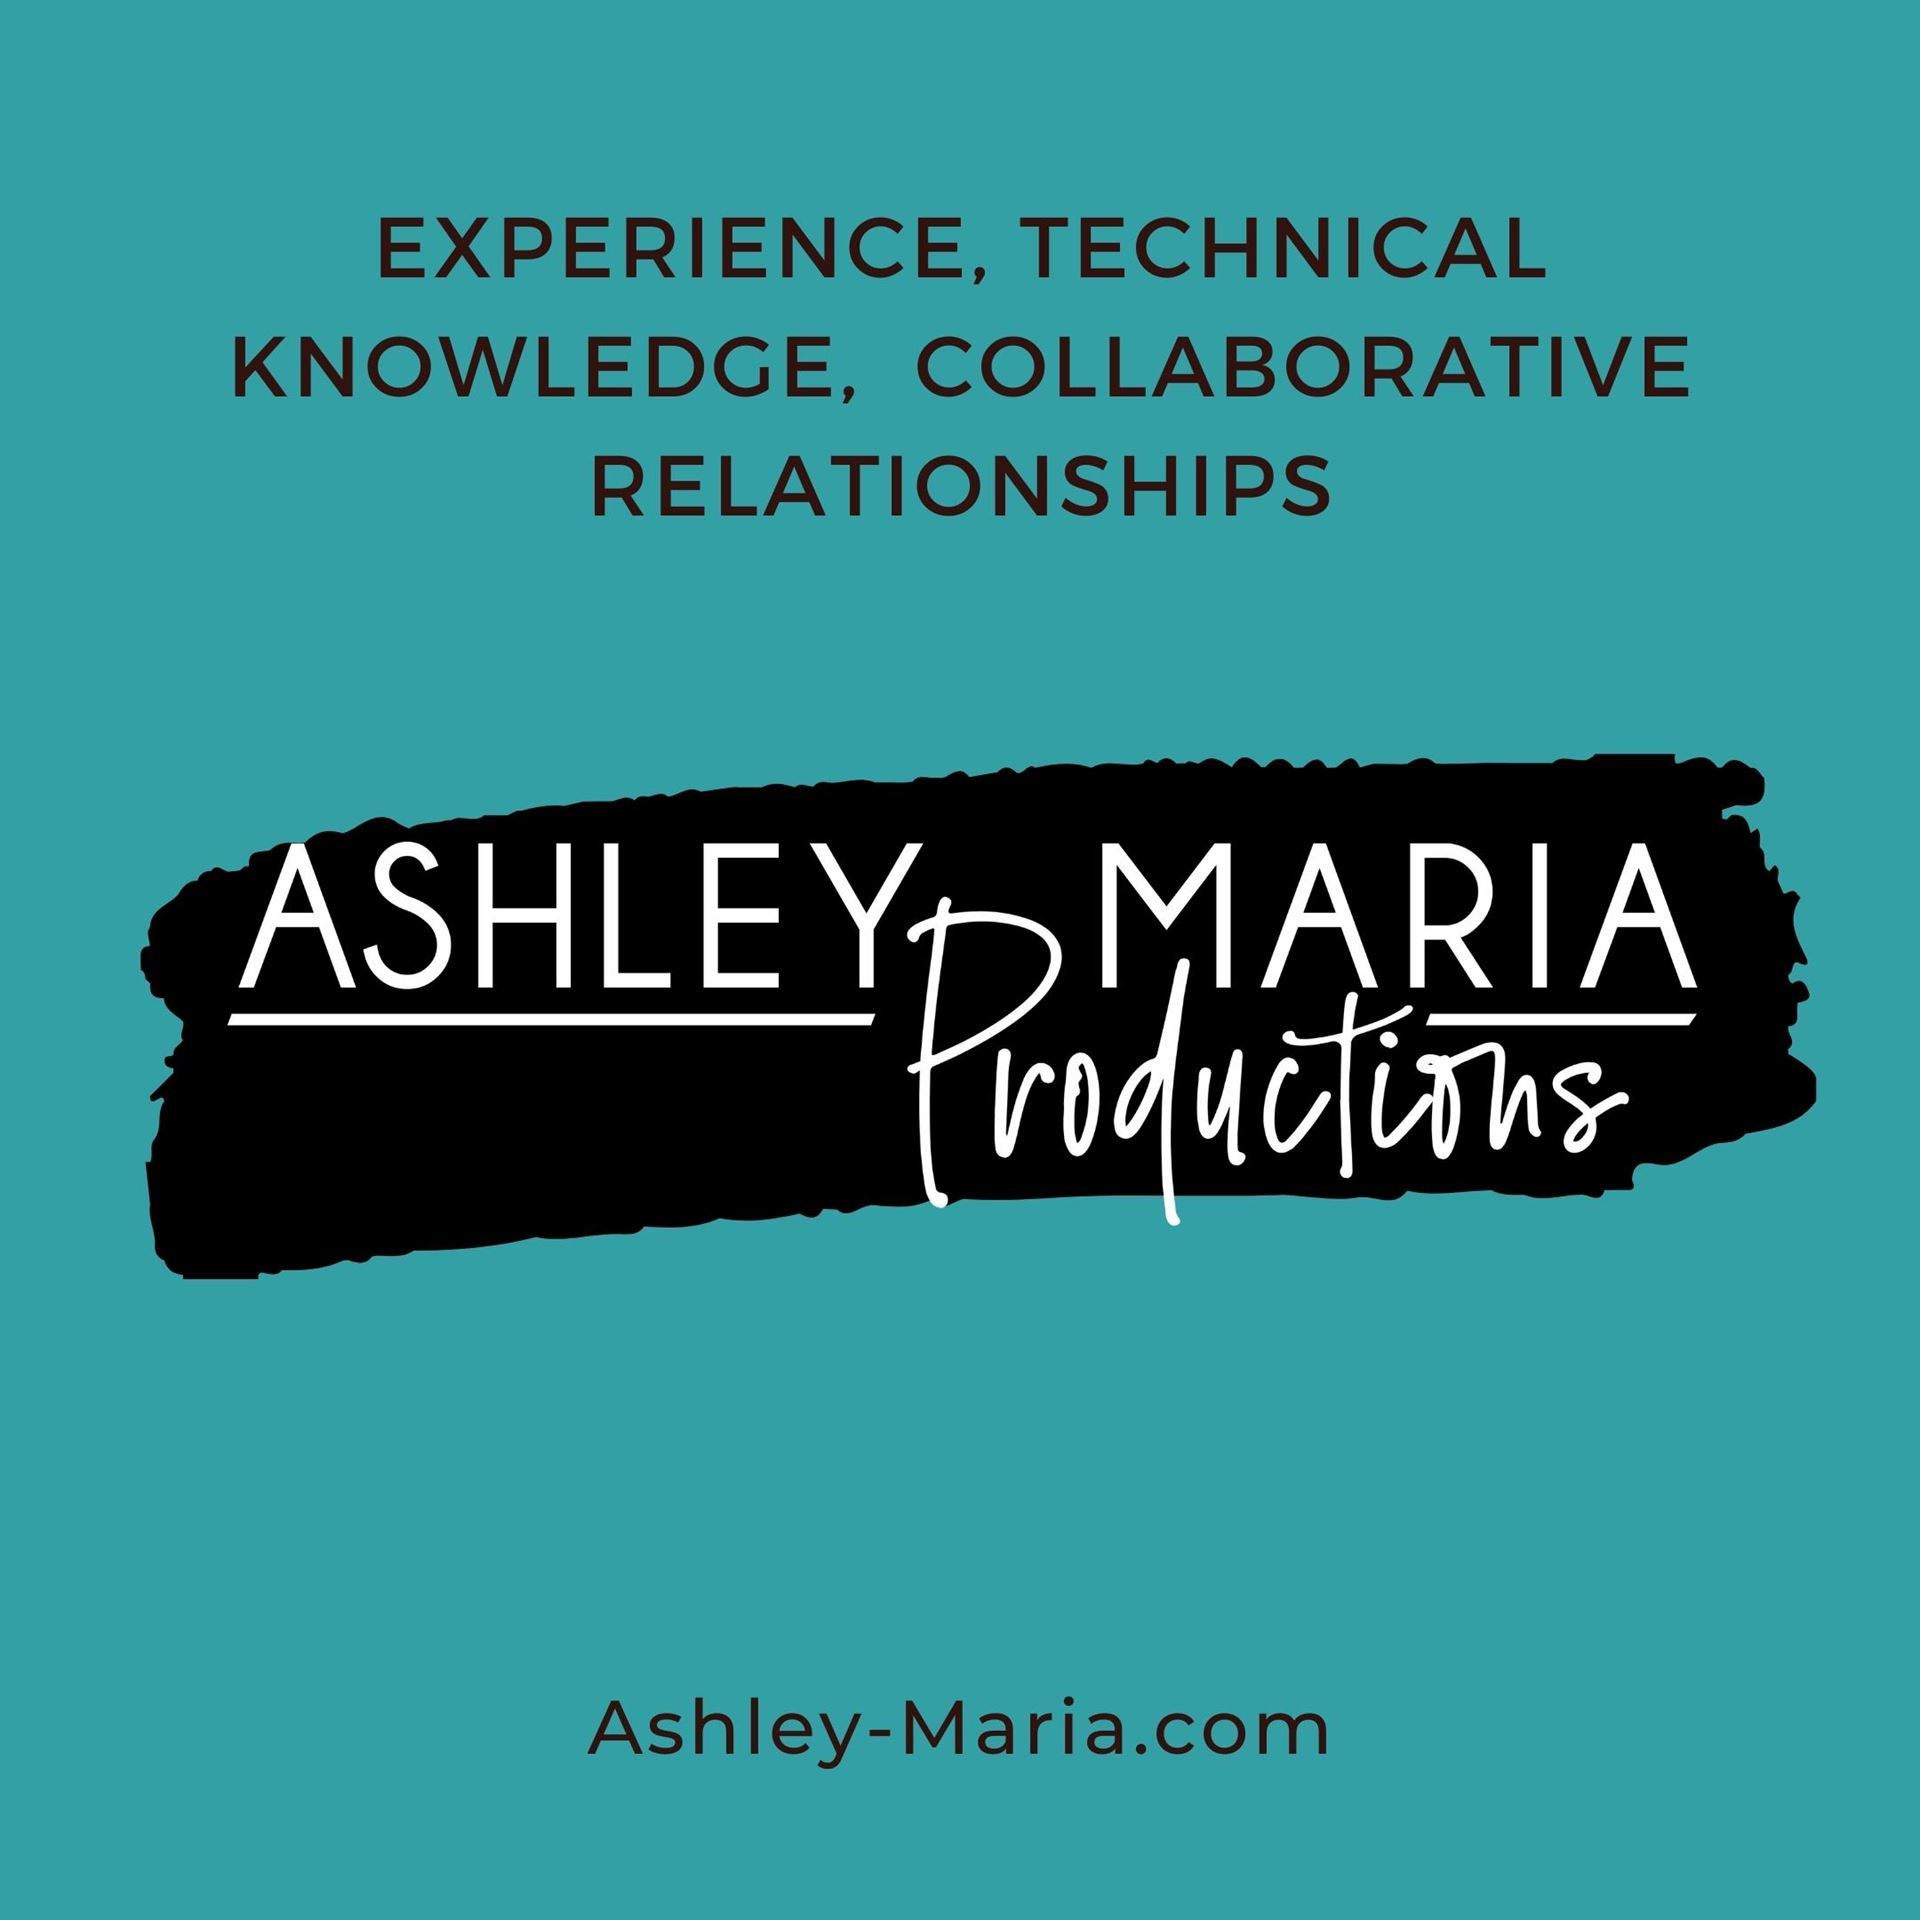 Ashley Maria Productions